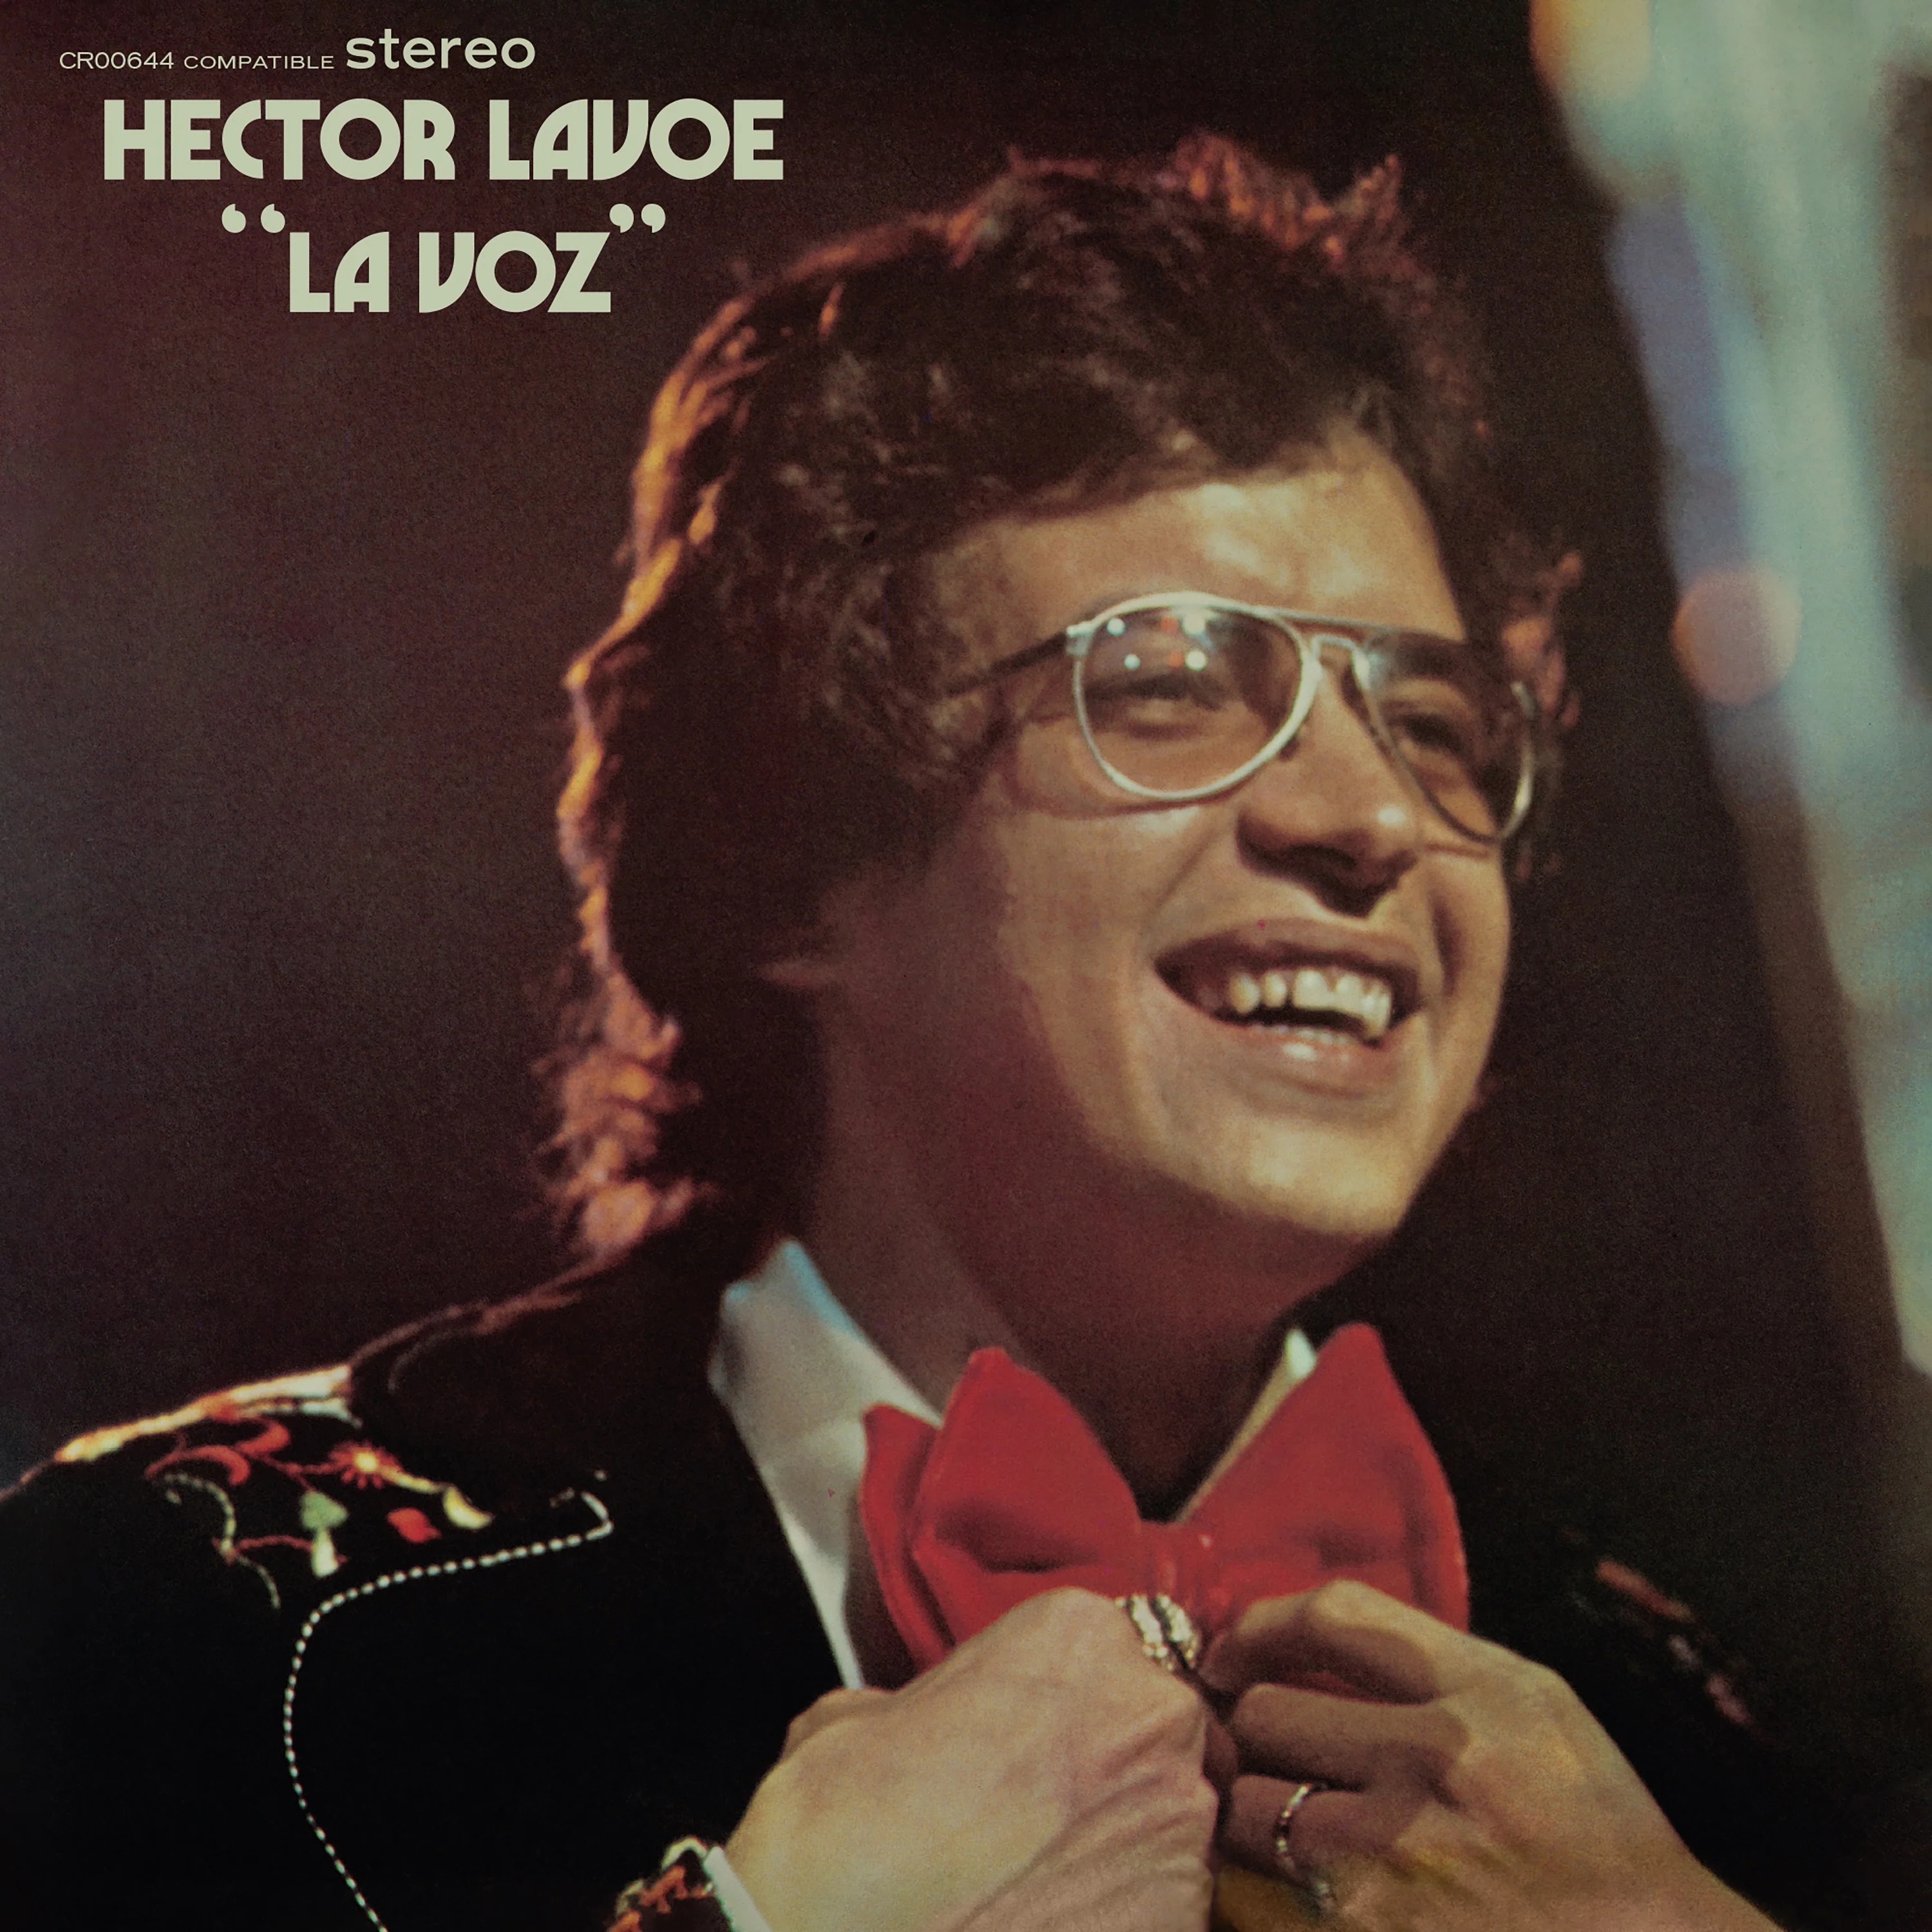 Hector Lavoe smiling